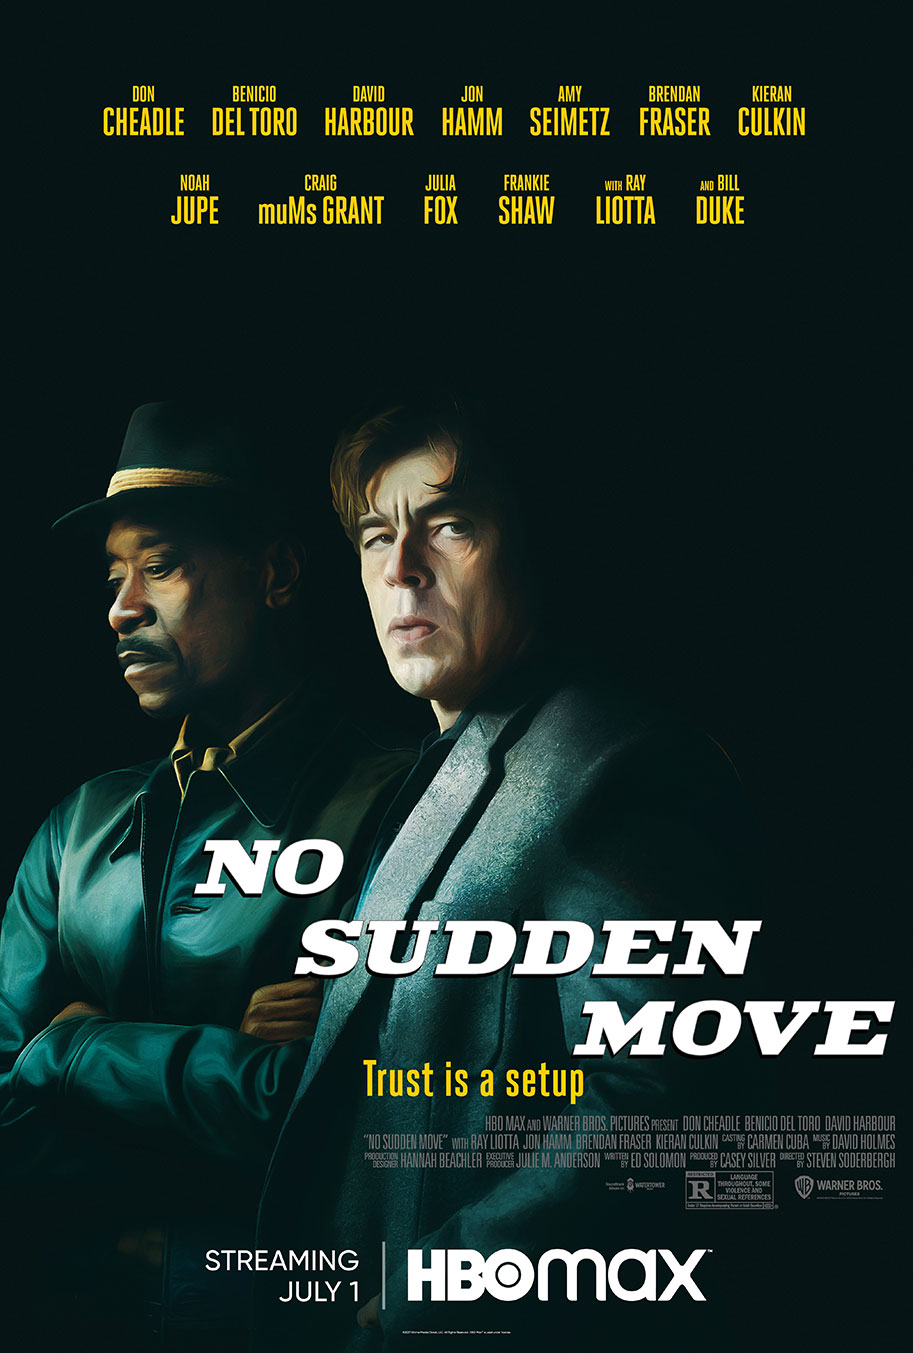 No Sudden Move, trailer, Steven Soderbergh, crime, thriller, HBO Max